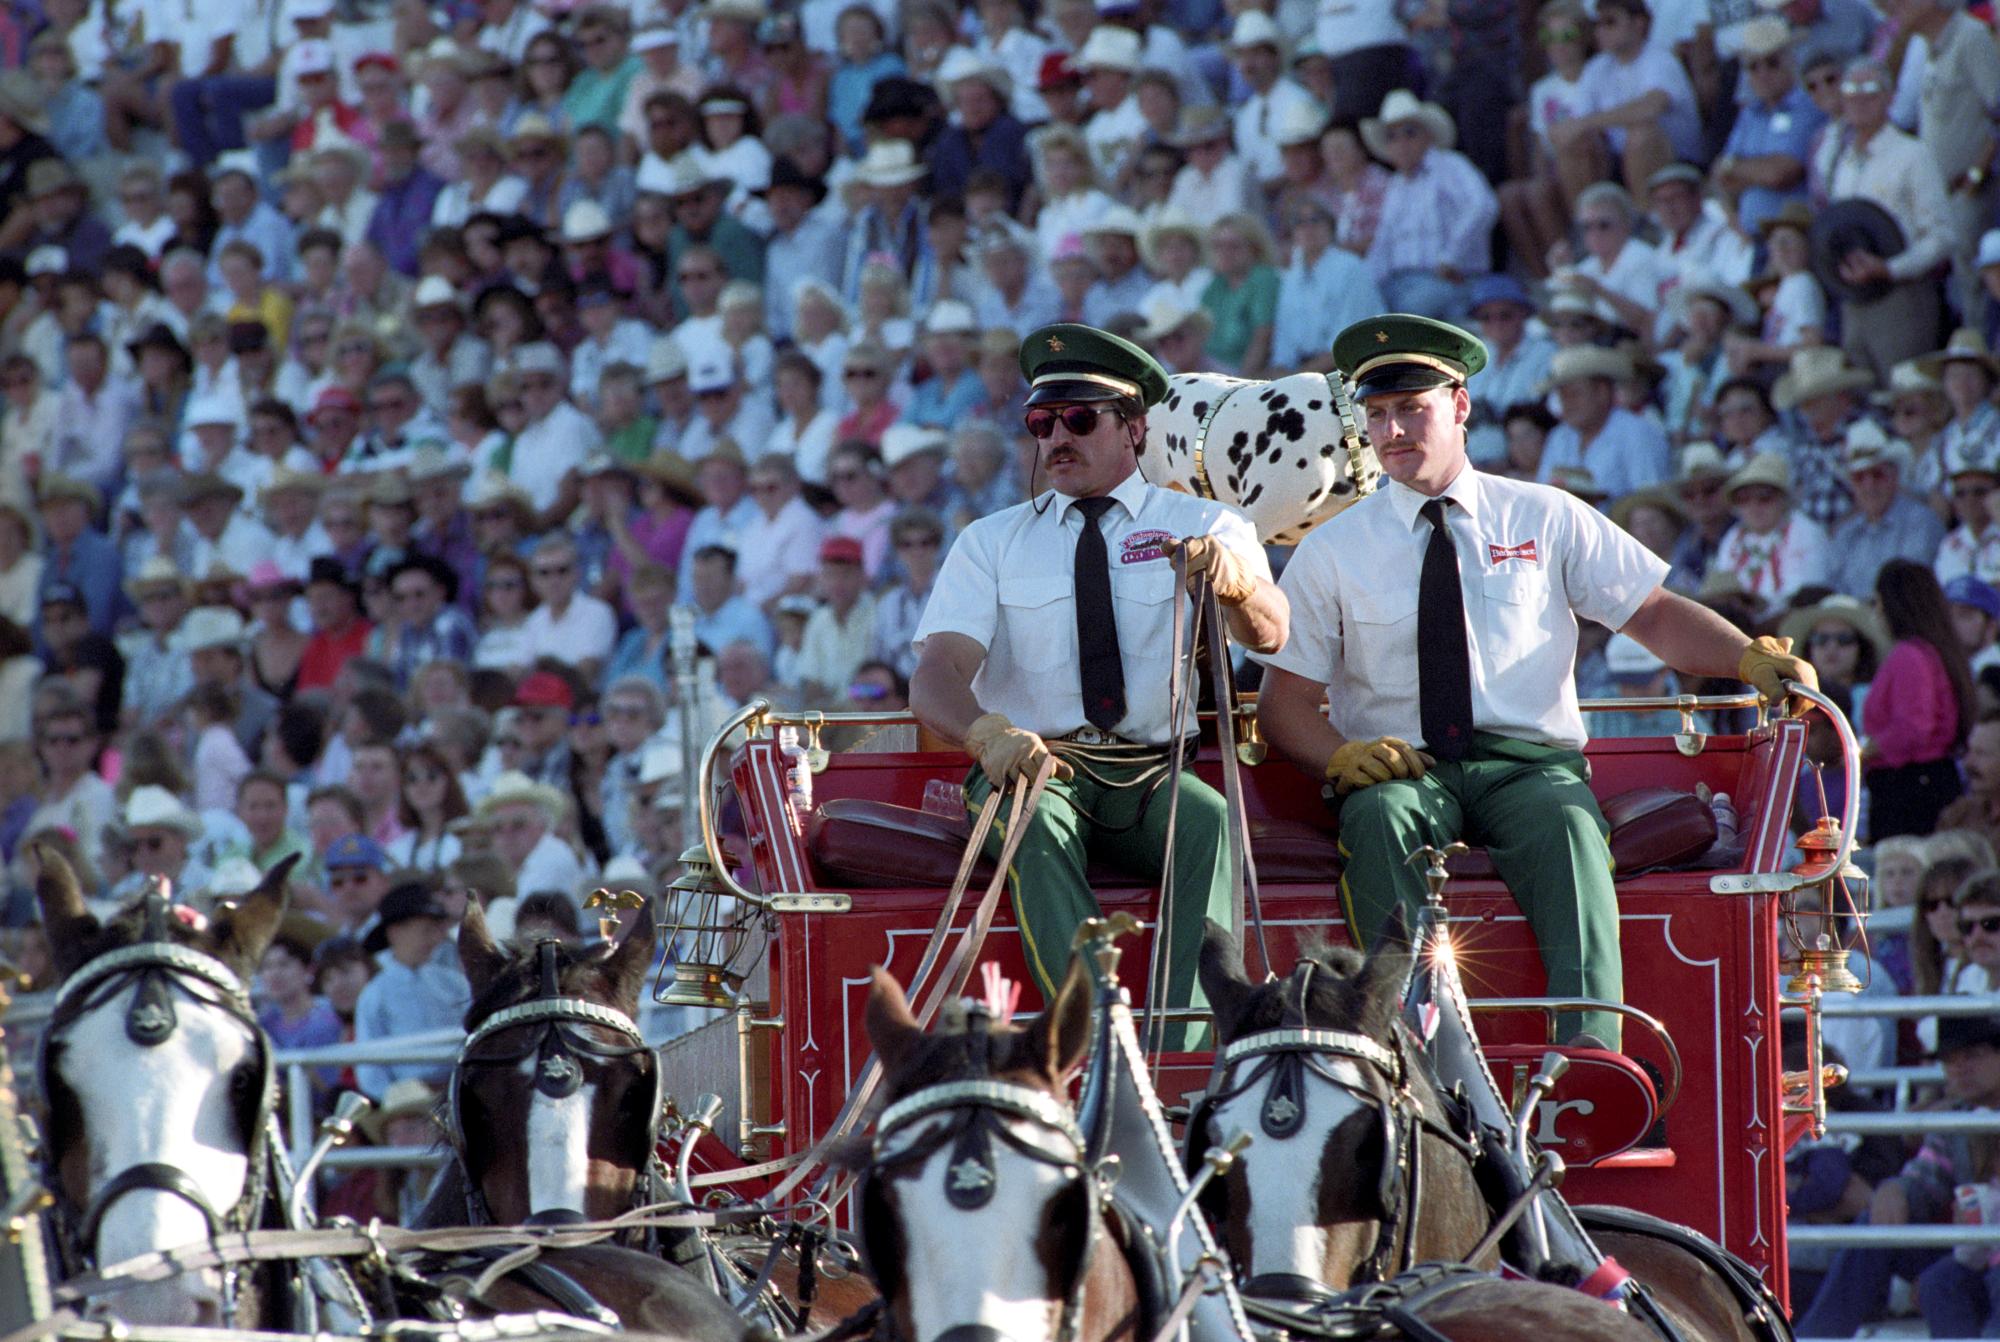 Imperial Valley Rodeo (1992) - Ceremonies #4